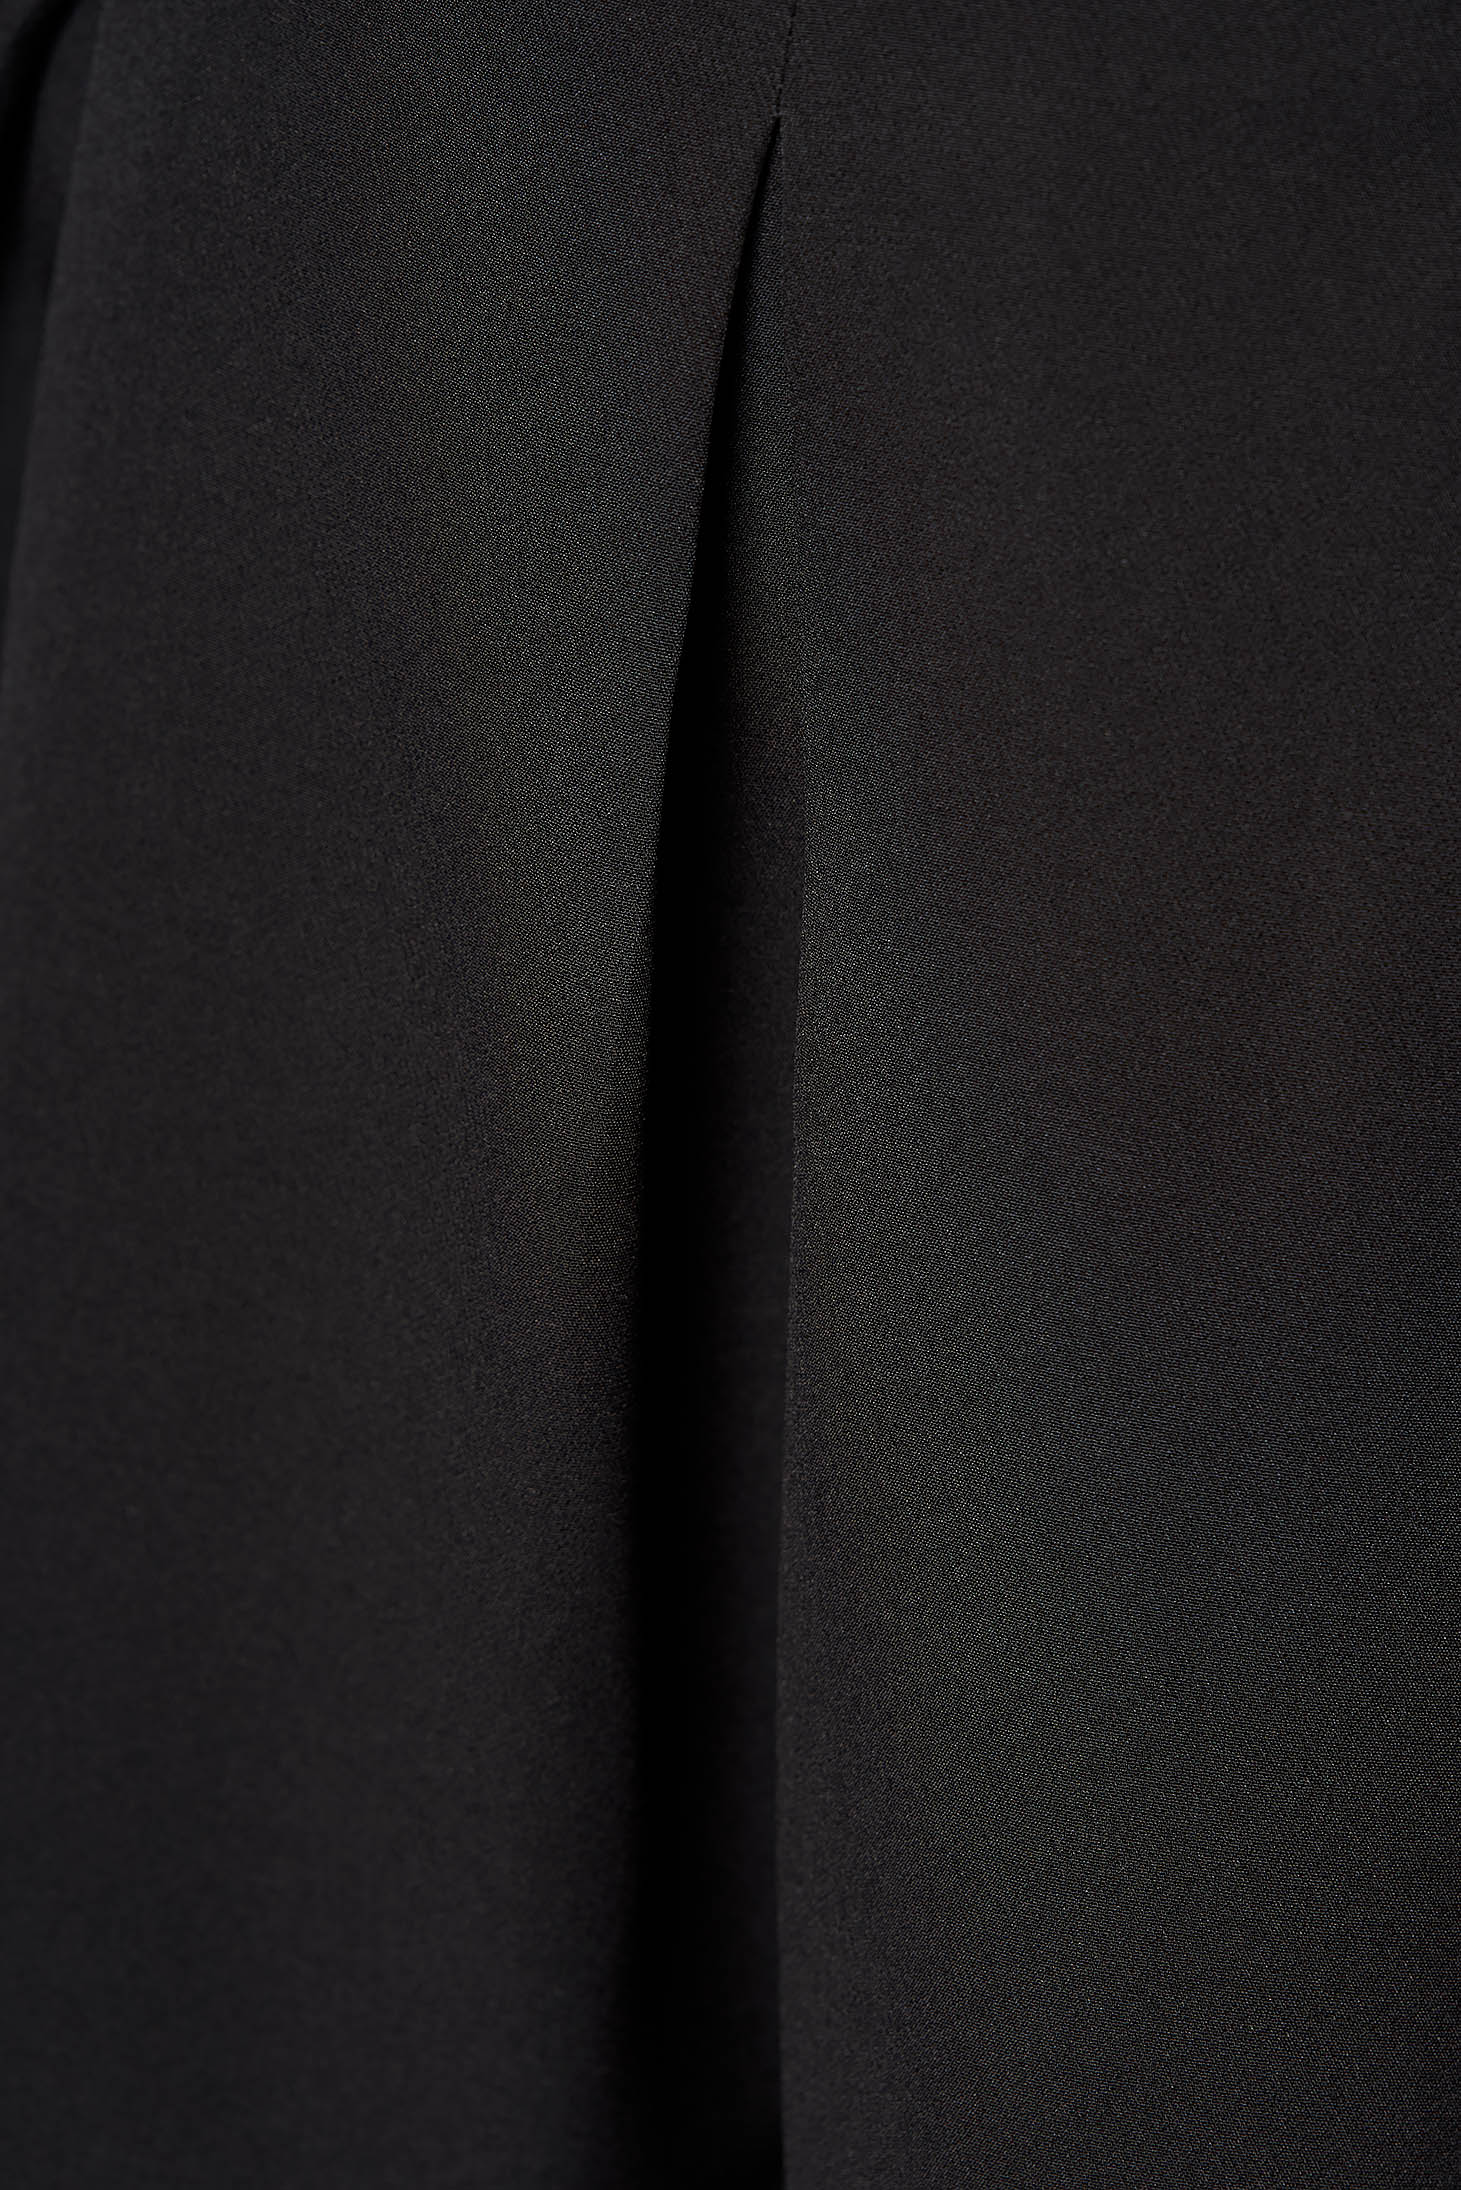 Artista black casual cloche skirt slightly elastic fabric with medium waist